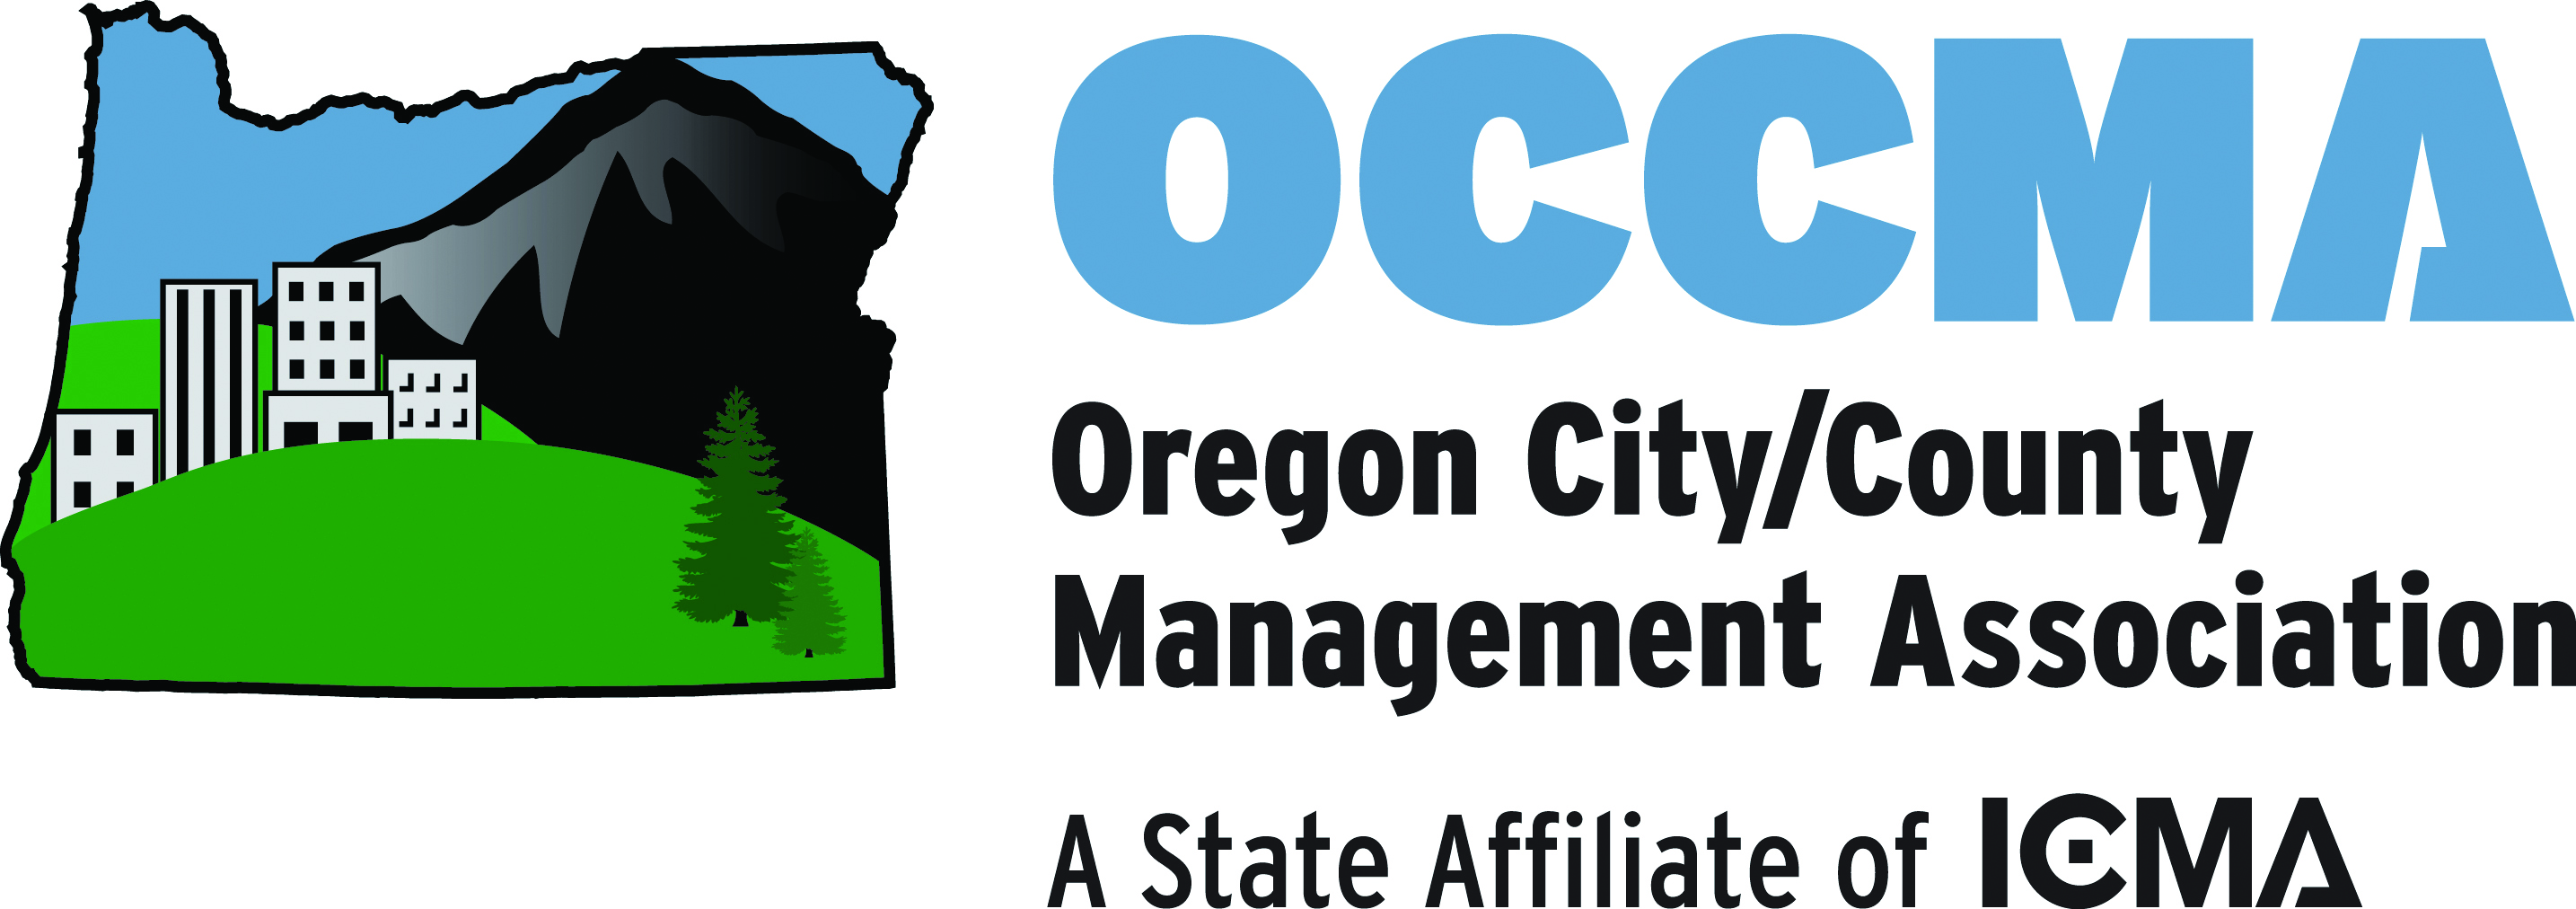 Oregon City/County Management Association Logo